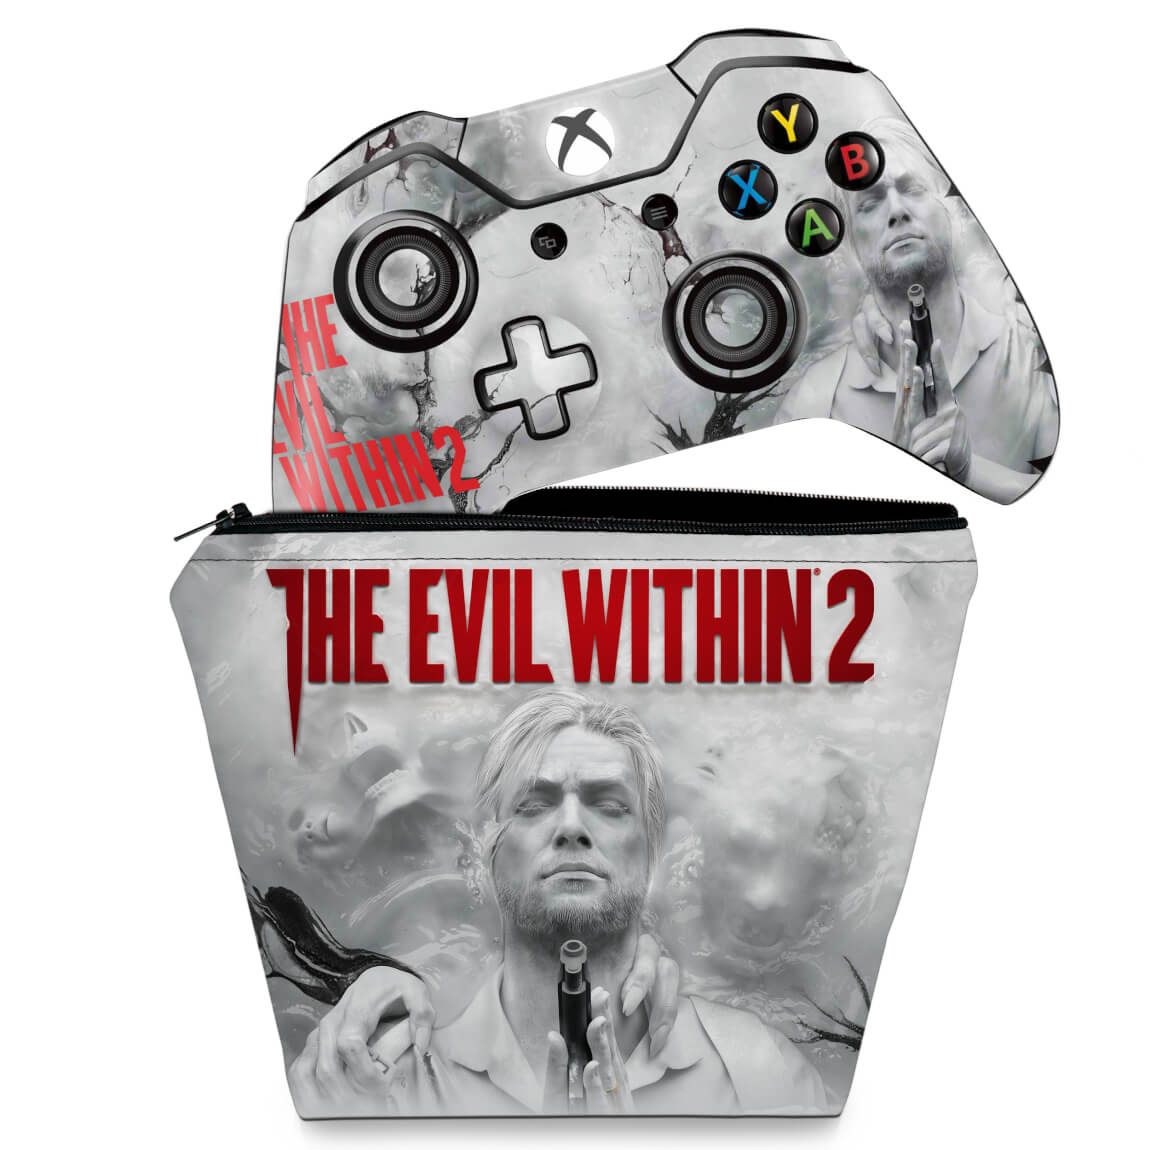 Capa Case e Skin Compatível Xbox One Fat Controle - Resident Evil